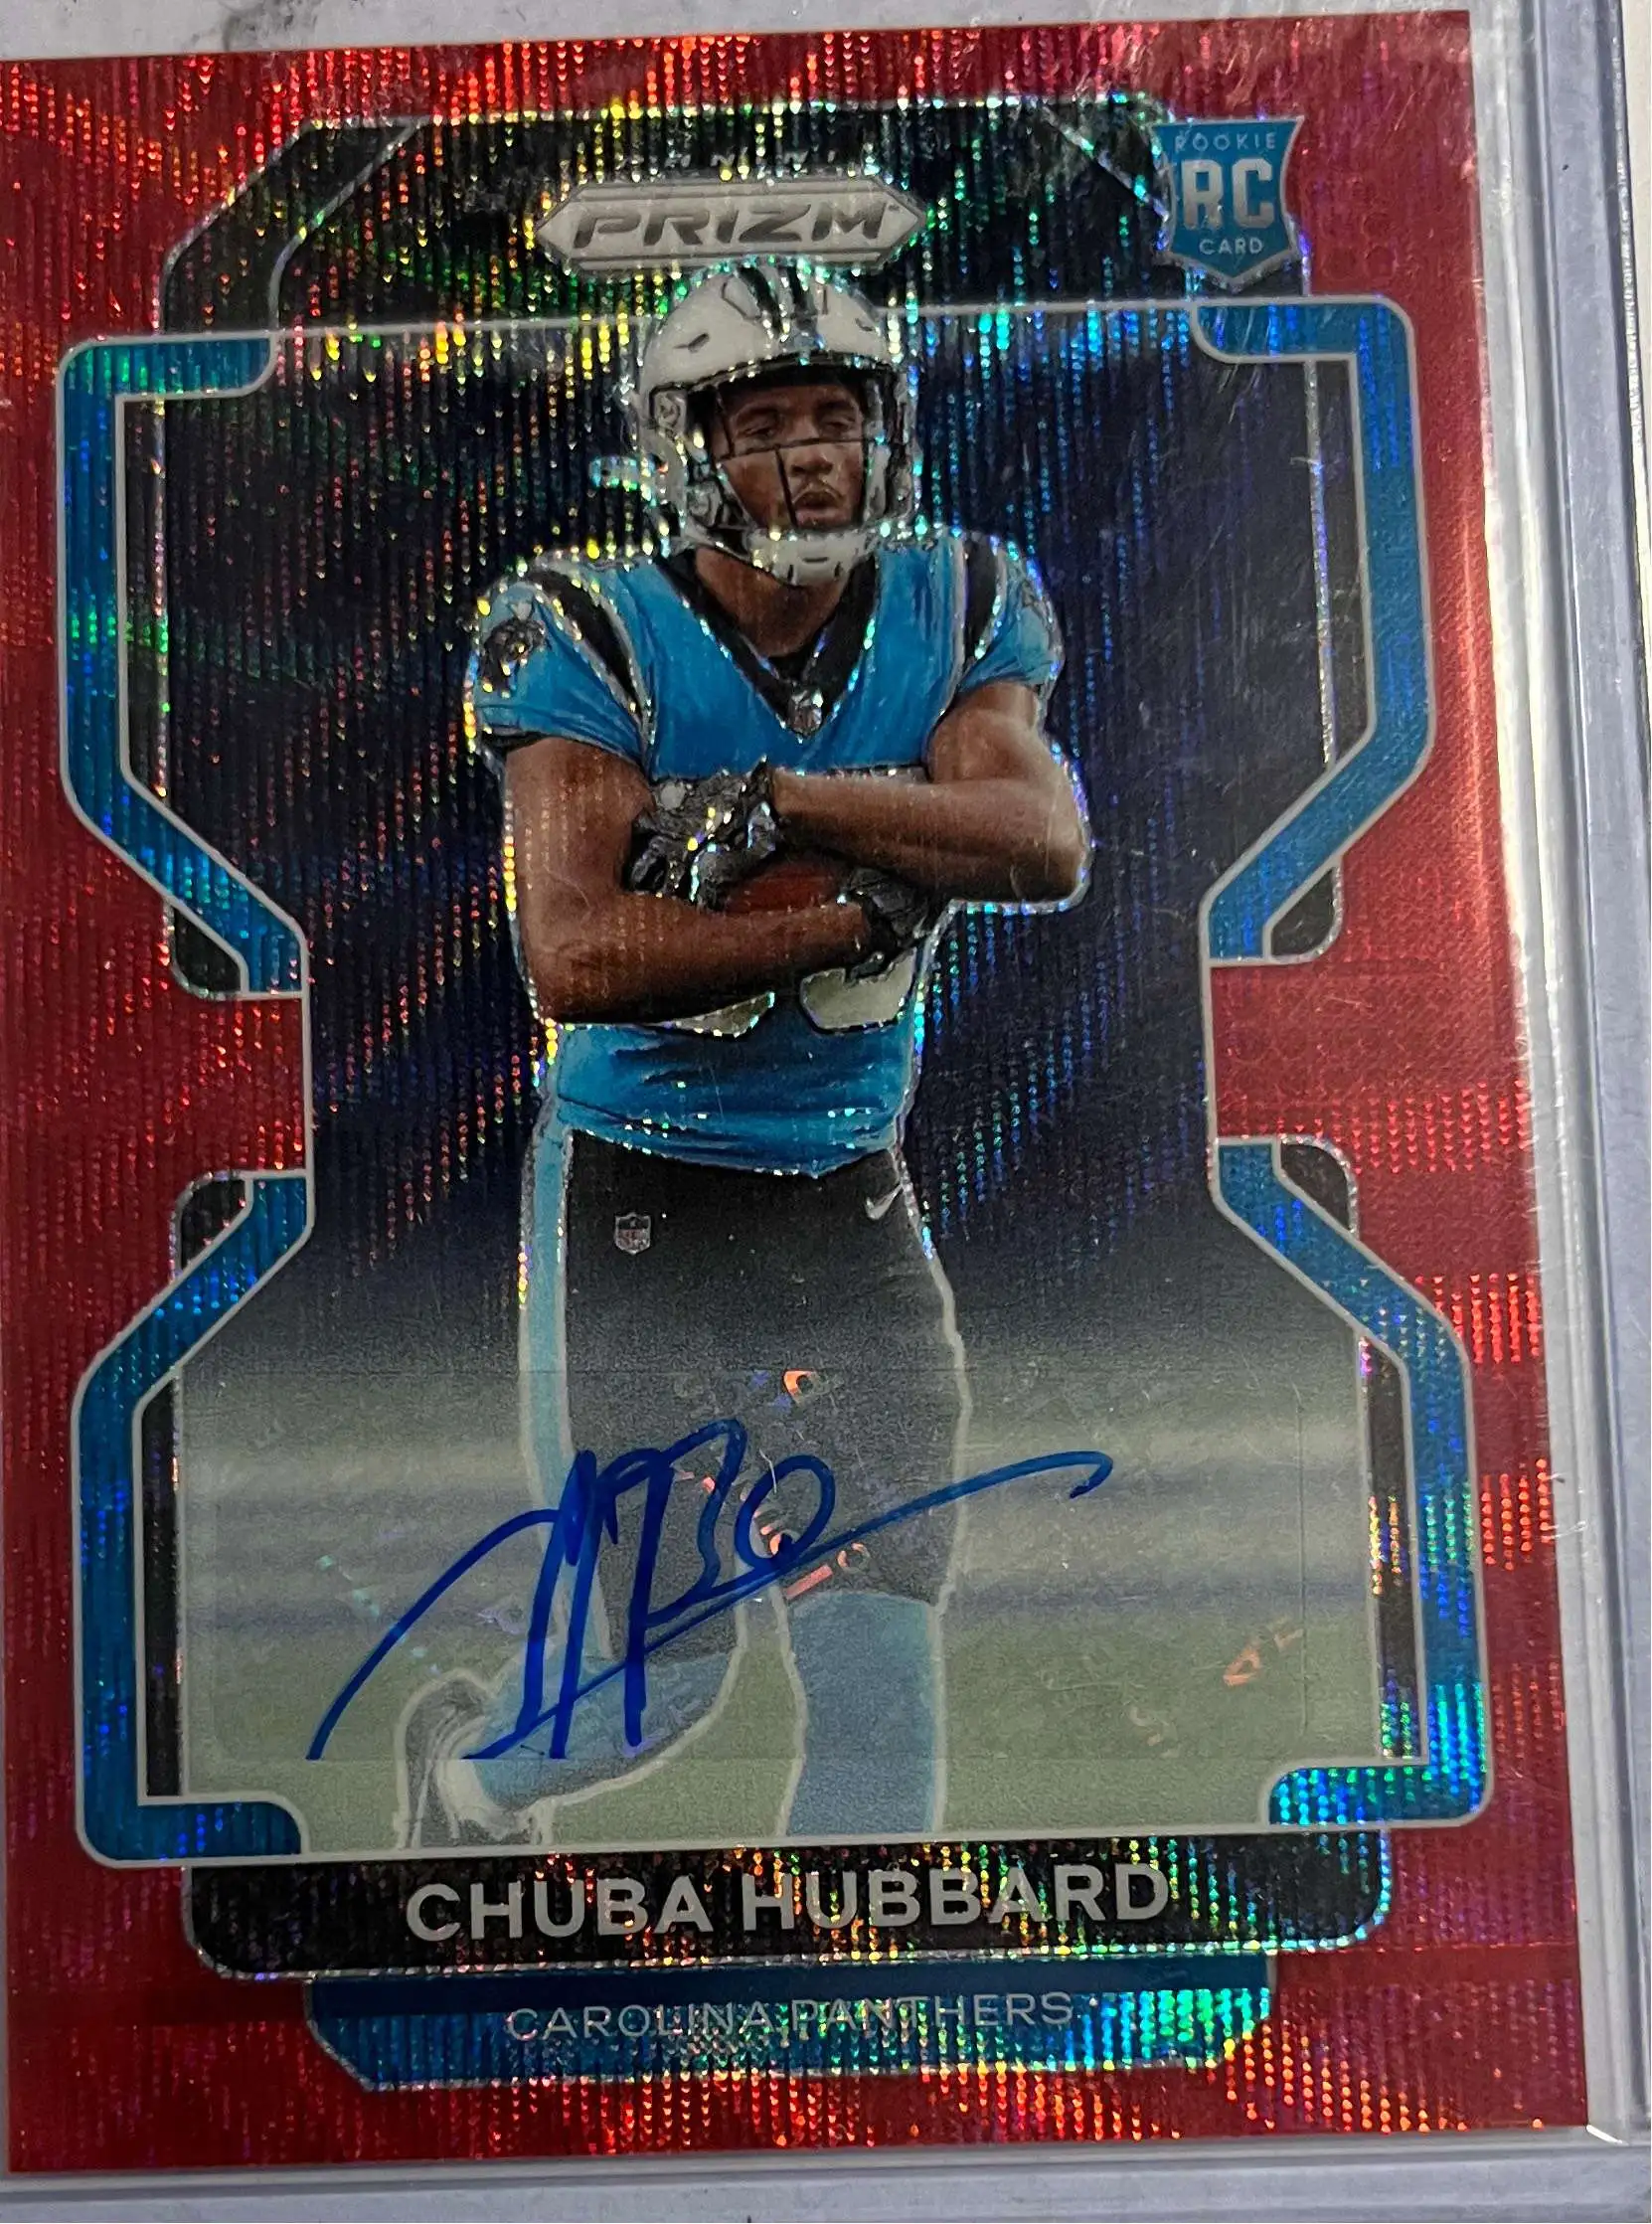 NFL 2021 Prizm Football Chuba Hubbard 79149 Autographed Trading Card 355  Red Wave Panini - ToyWiz